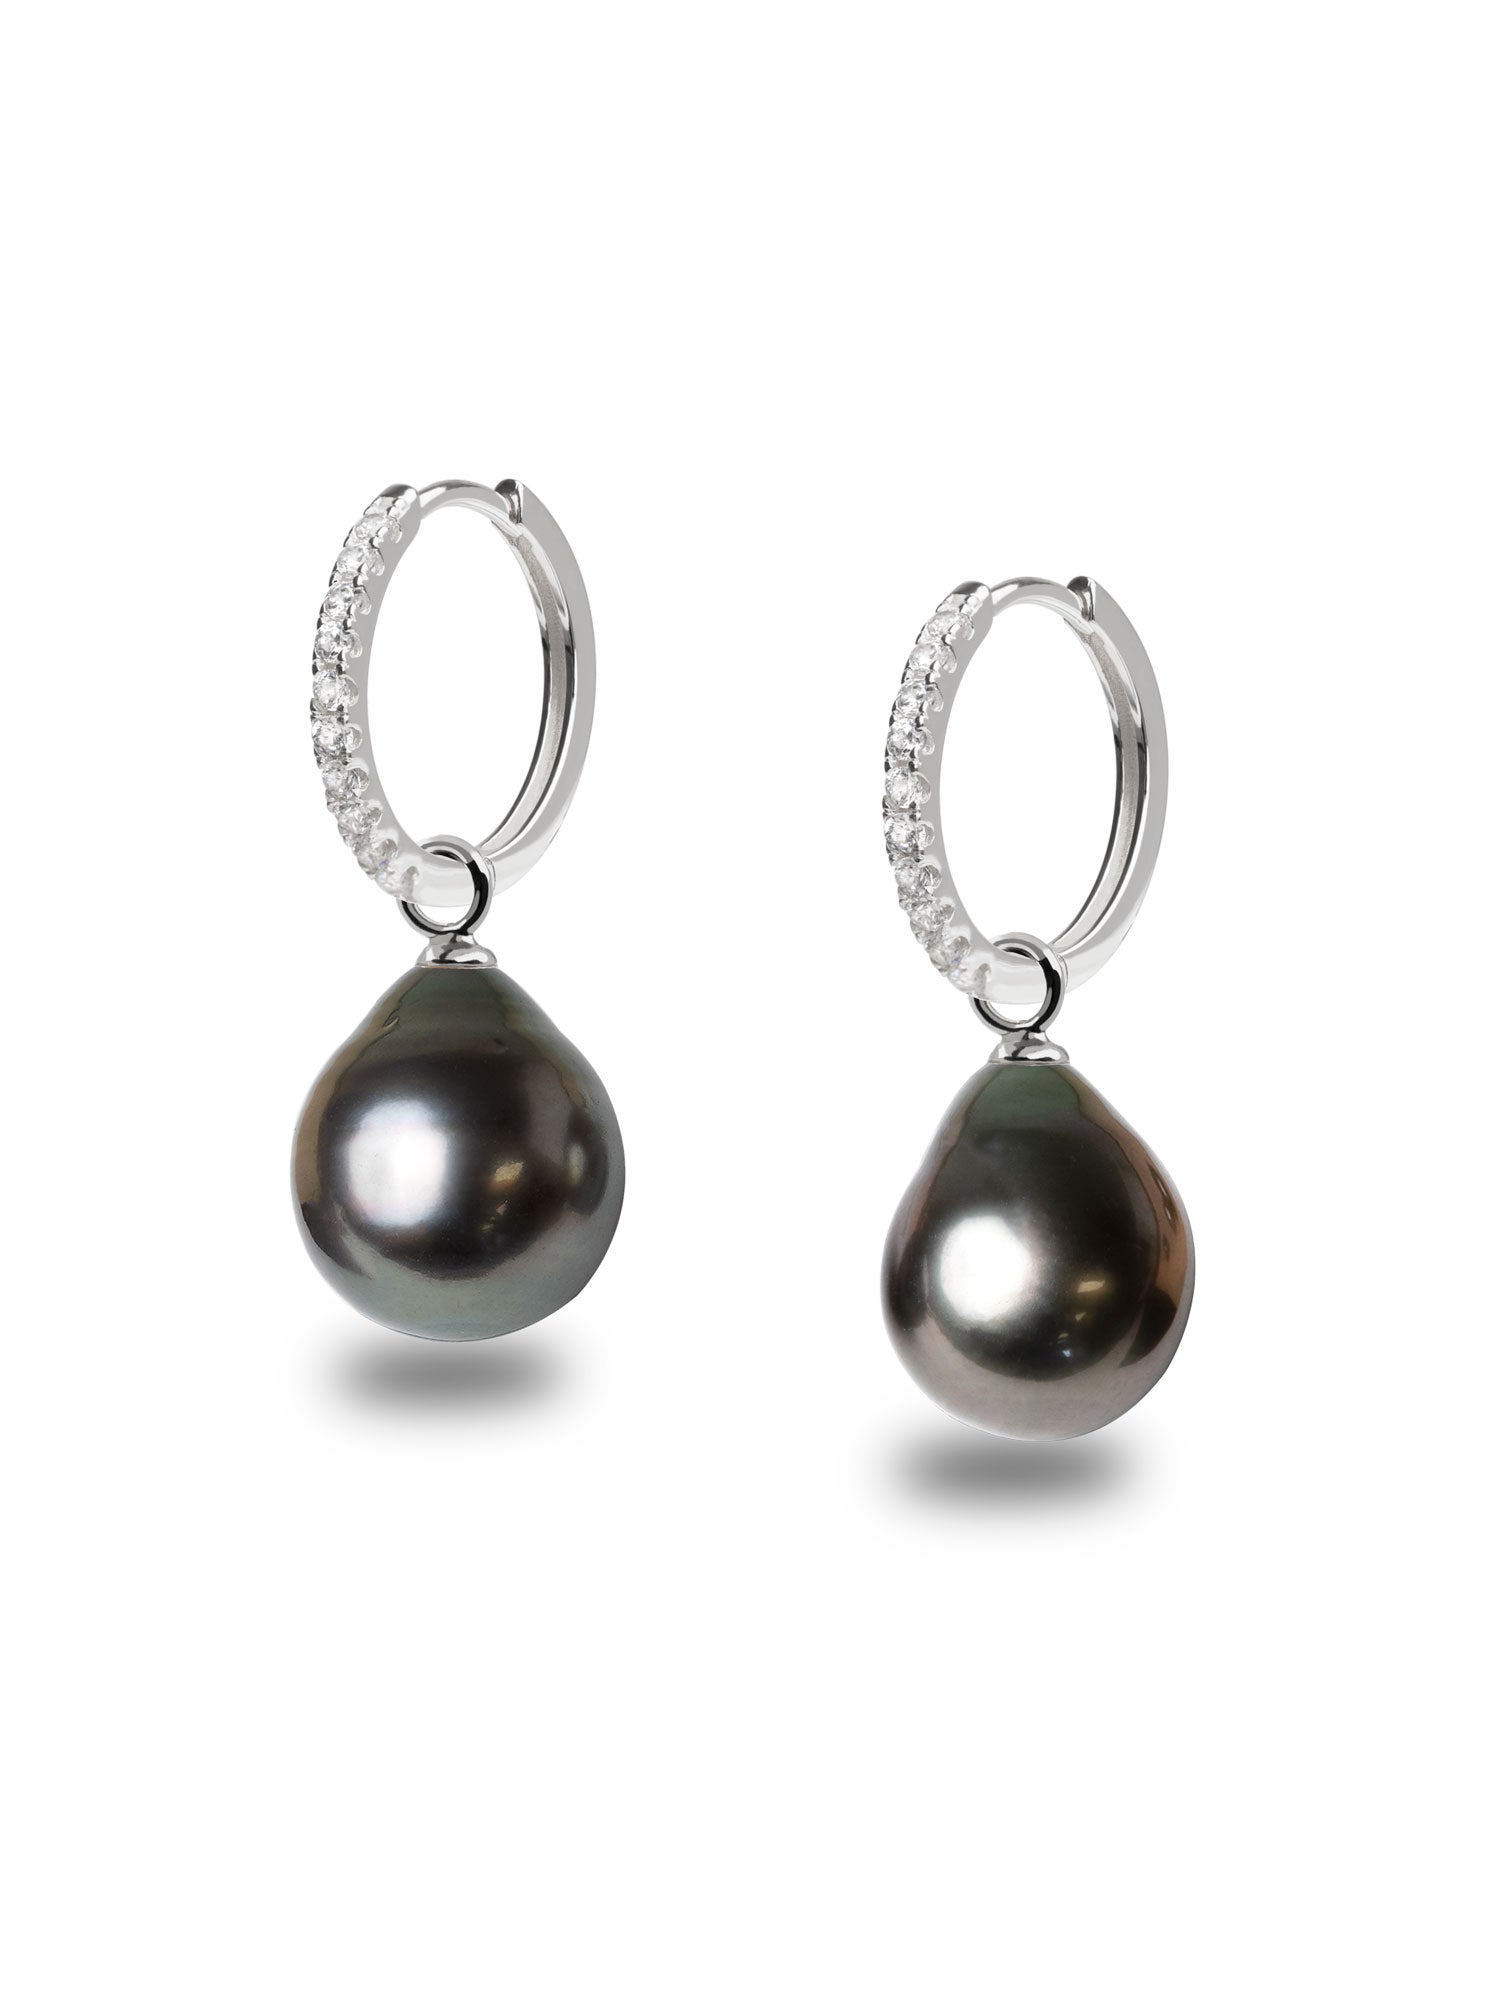 16mm Hoop Earrings Sterling Silver with Zirconia and Tahiti Baroque Pearl